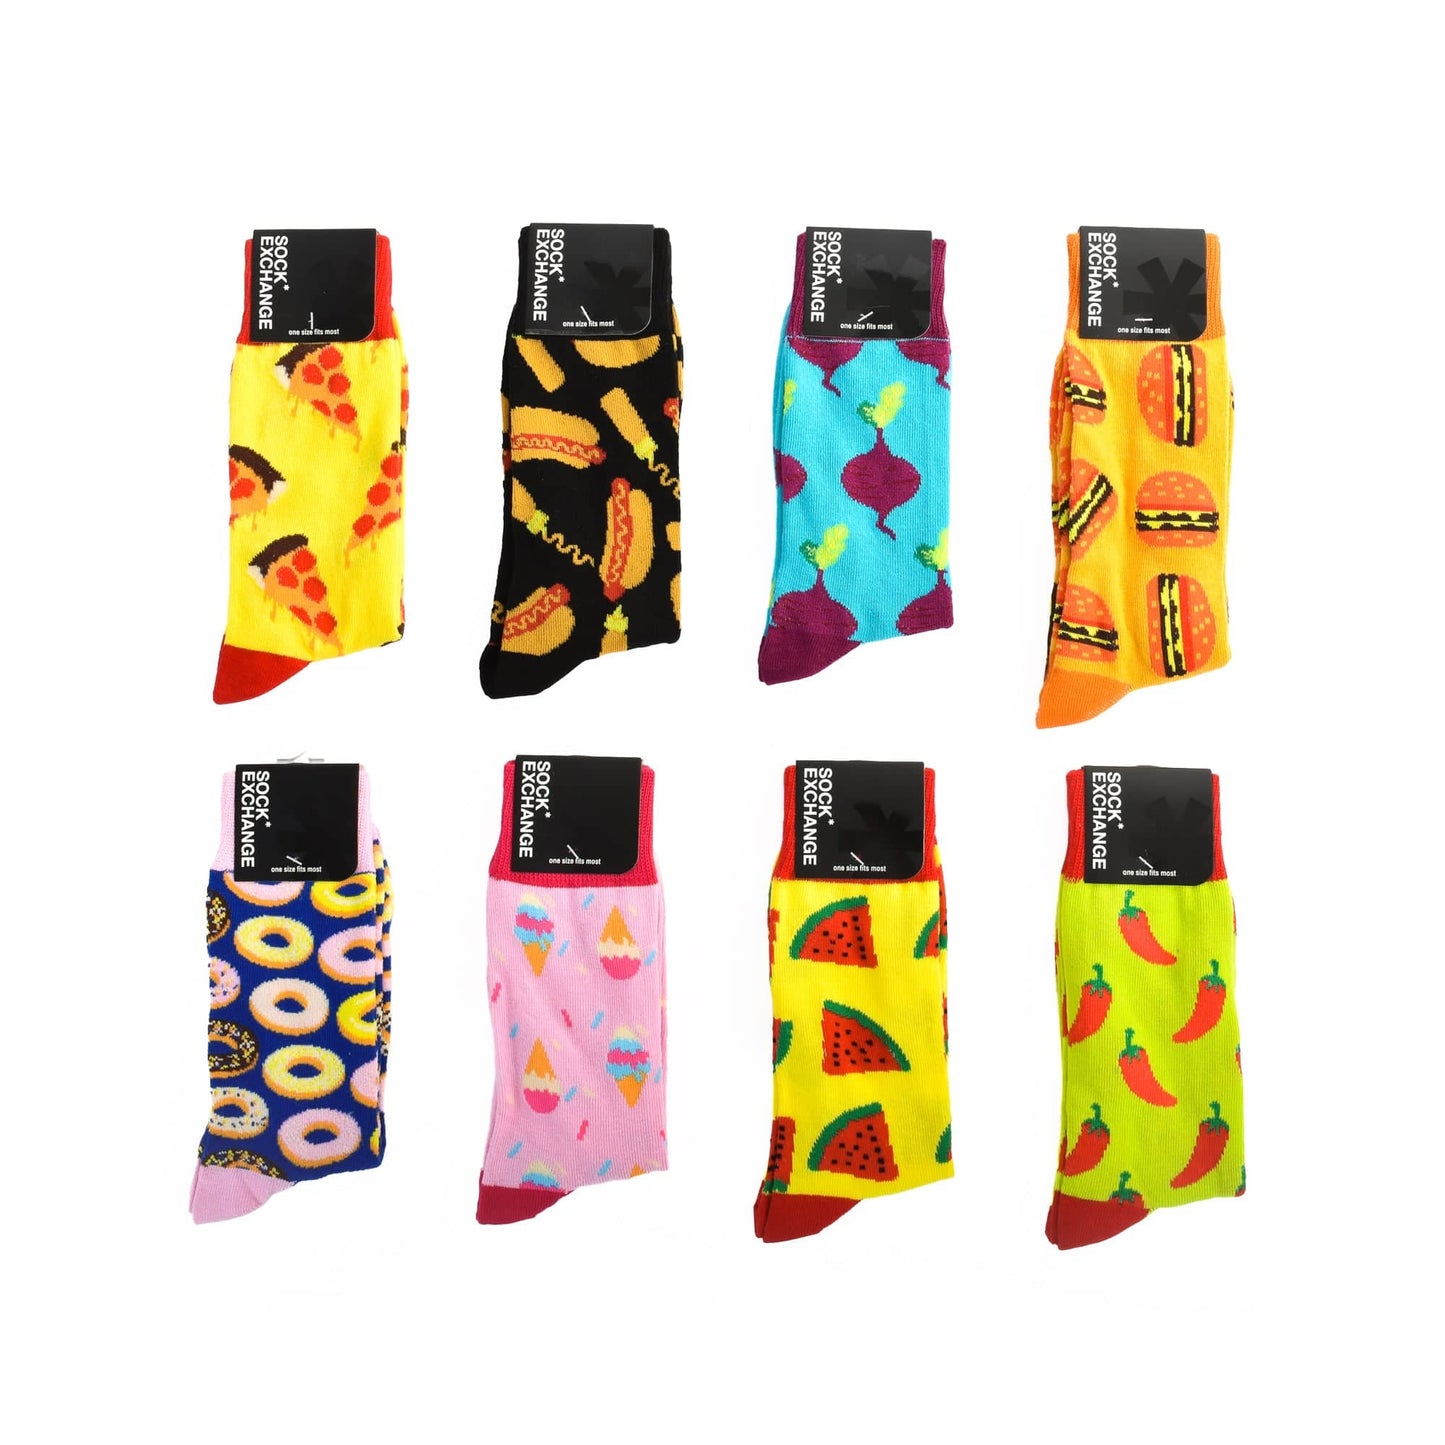 Sock Exchange Socks 8 Pairs Fashion Novelty Funny  Socks one Size 5-13 Men  Socks  Women  Socks #5